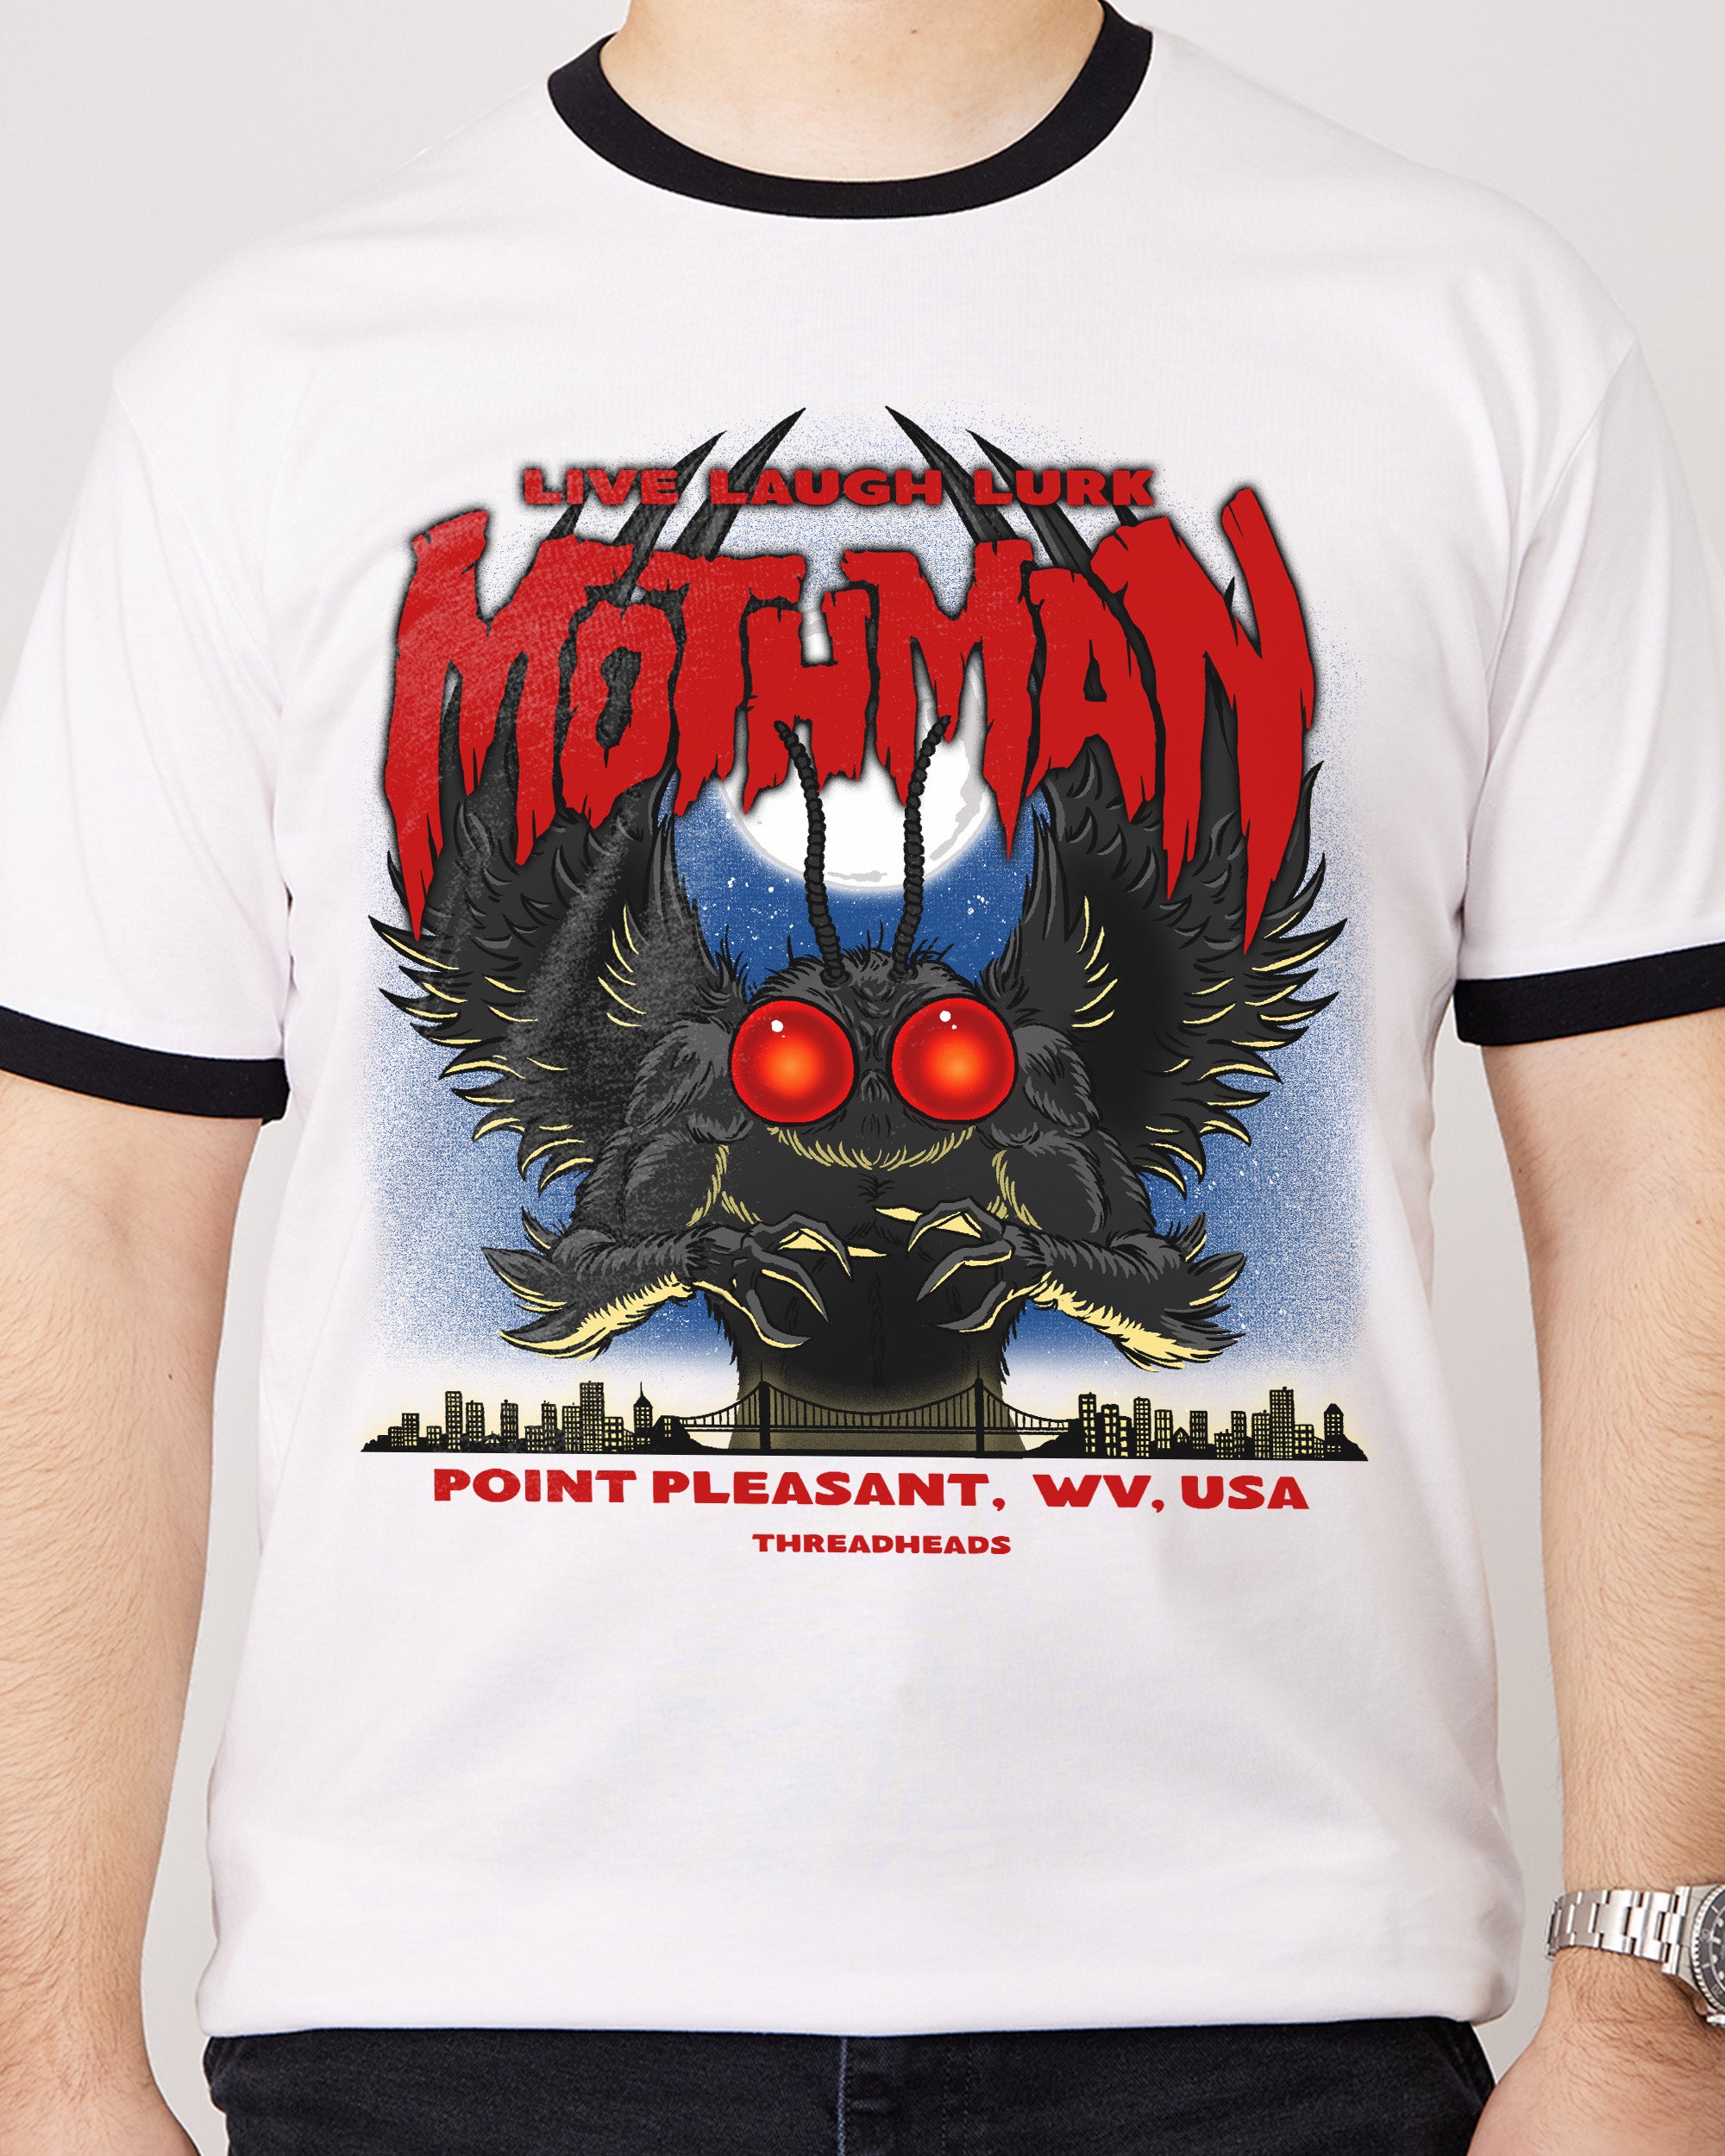 Mothman - Live Laugh Lurk T-Shirt Australia Online